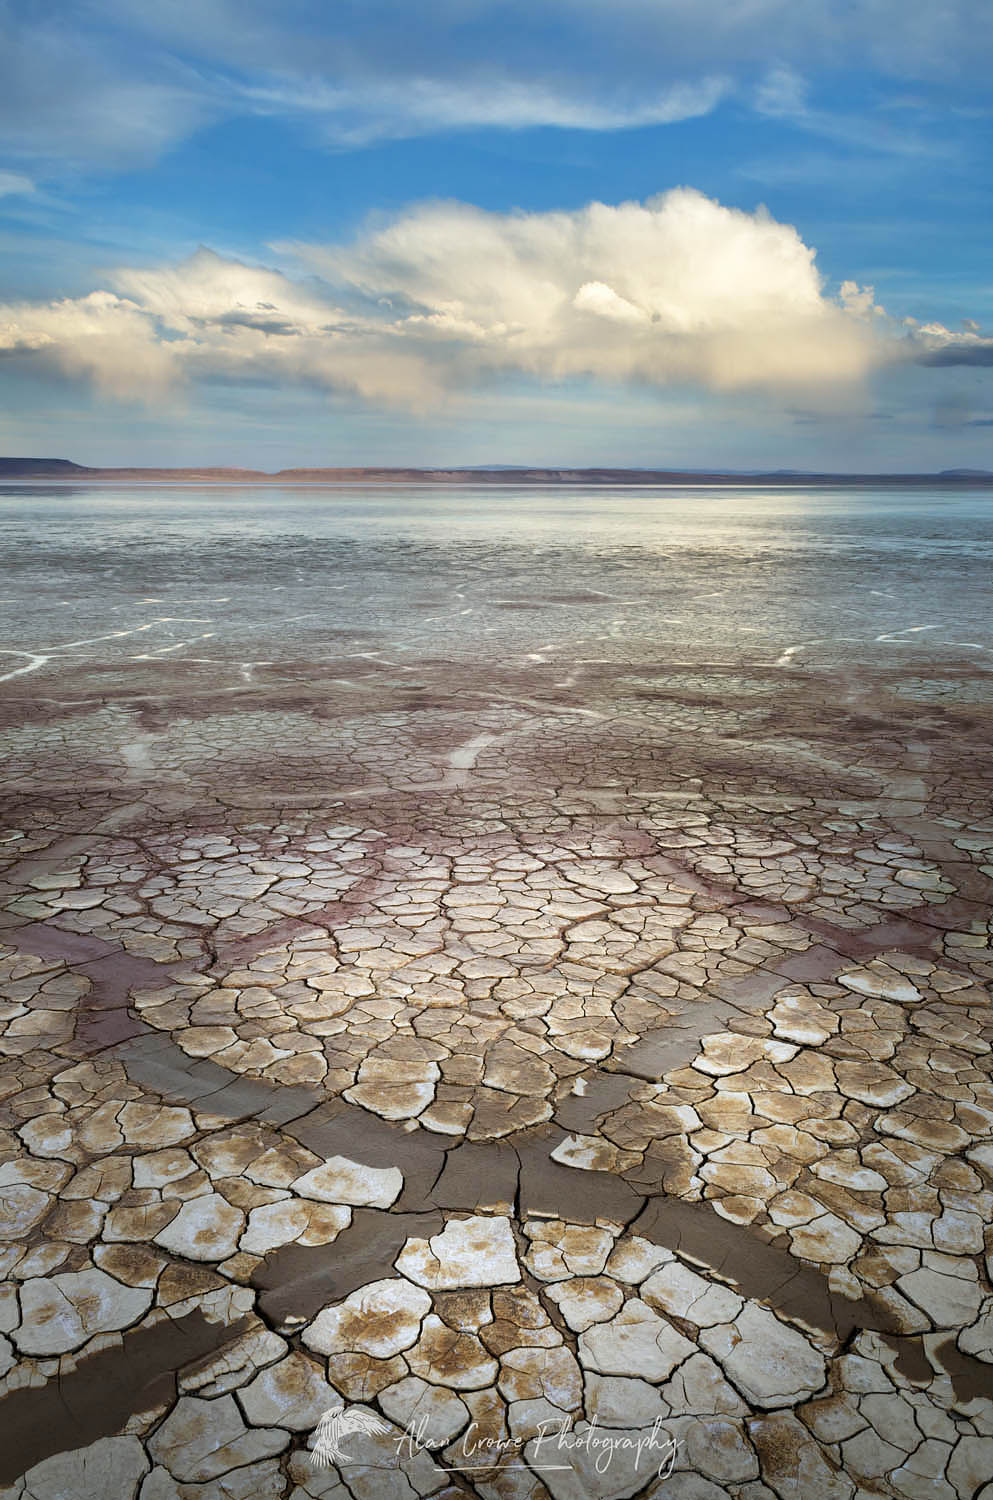 Geometric patterns in drying mud, Alvord Lake, a seasonal shallow alkali lake in Harney County, Oregon #61002